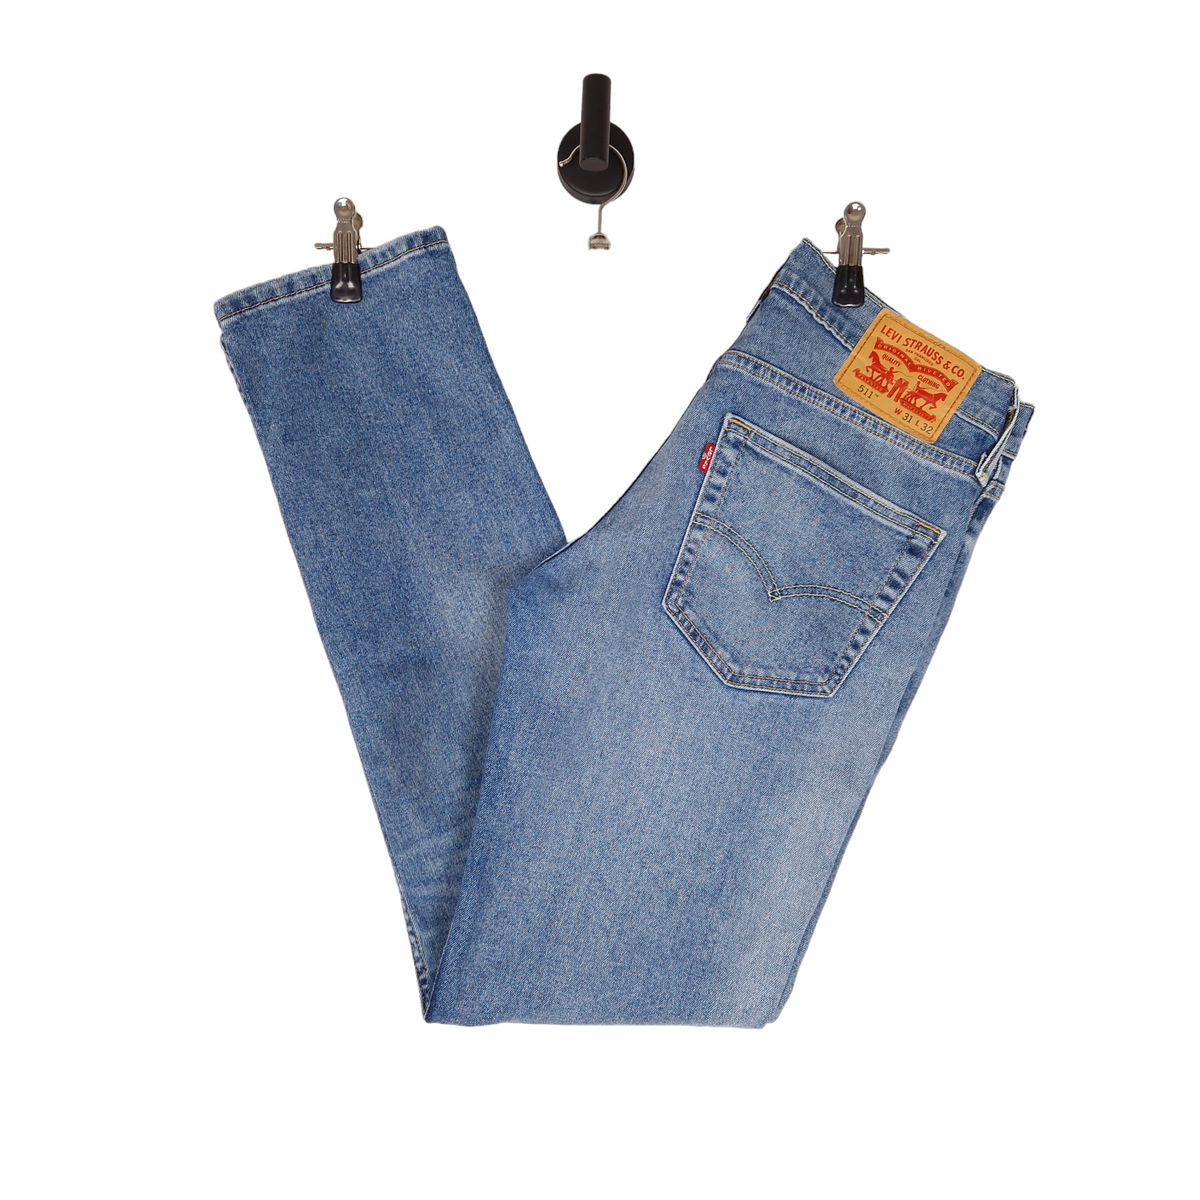 Levi's 511's Denim Jeans - Size W31 L32